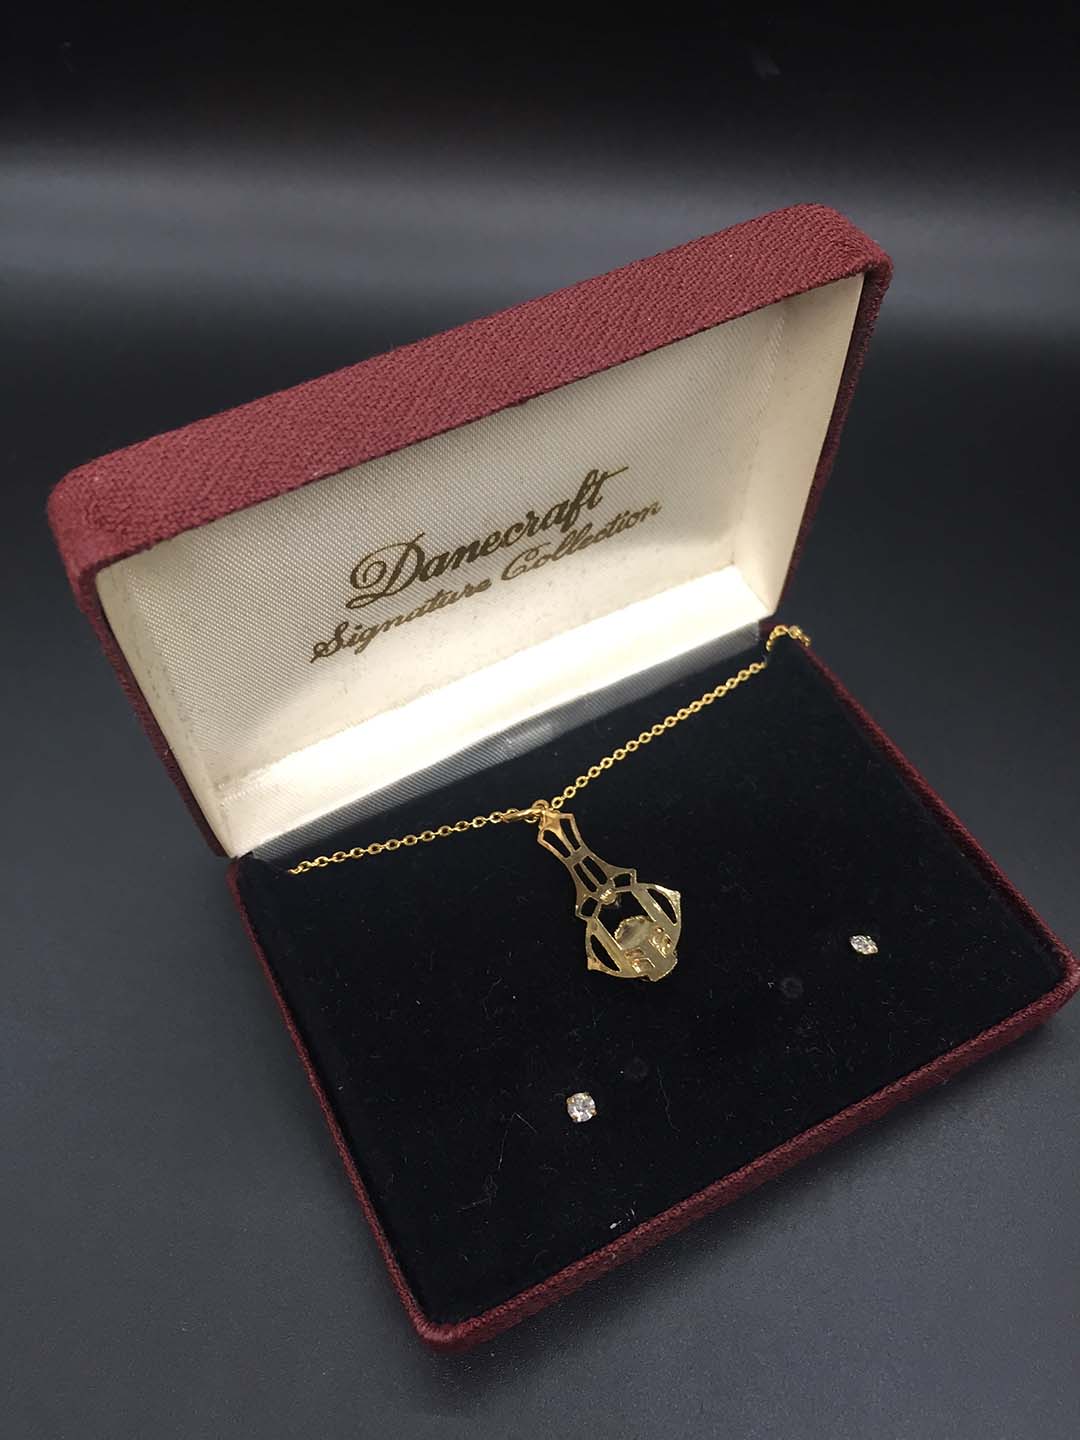 Opal Danecraft Signature Collection Pendant Necklace in Original Box